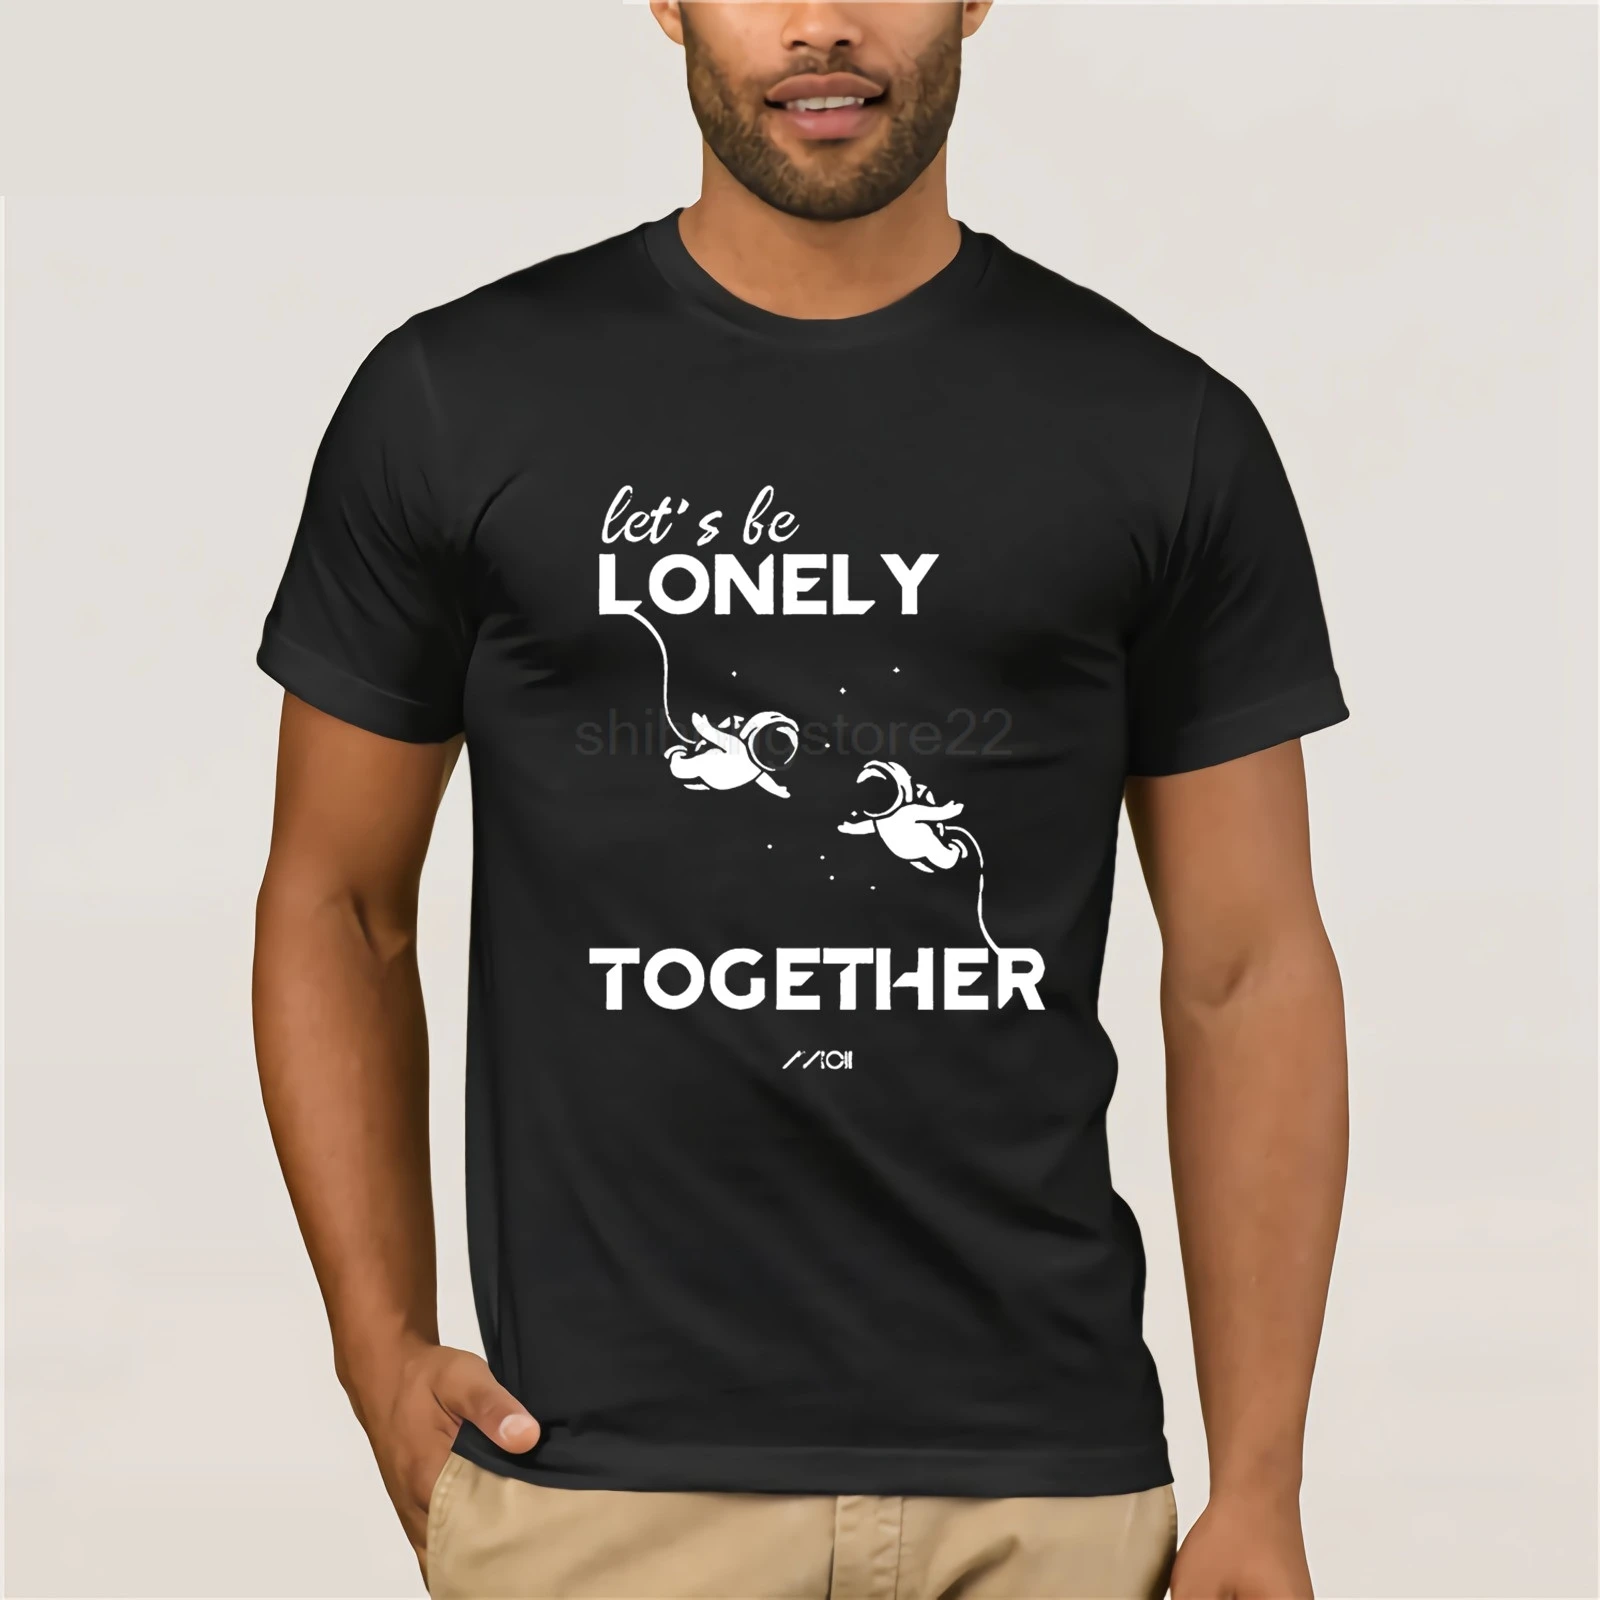 

DJ AVICII T shirt Homme Printed Let's Be Lonely Together Cotton Short Sleeve O-neck Hipster T-shirt Men